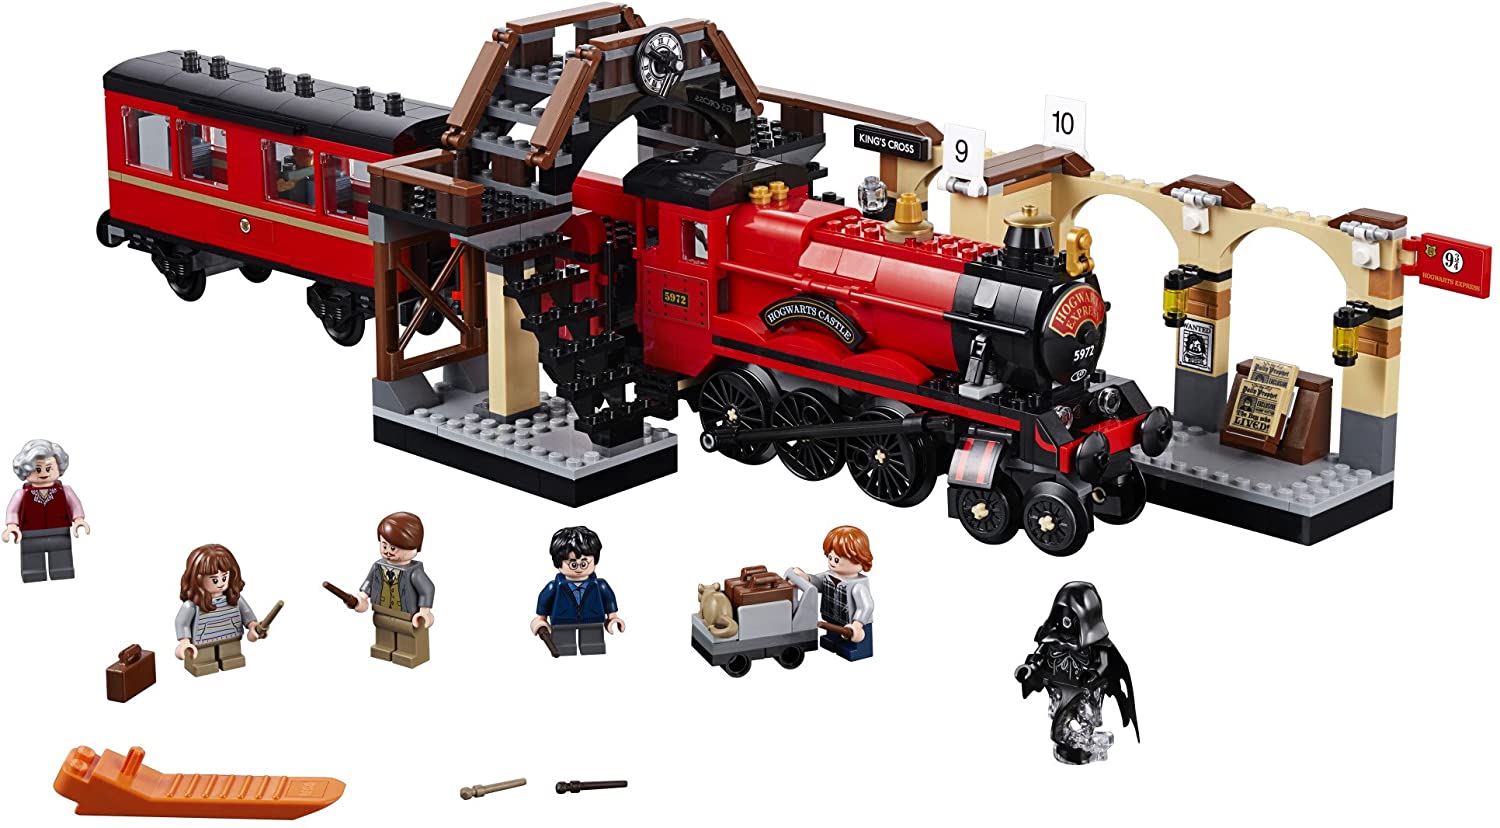 LEGO Harry Potter Hogwarts Express Train Set 75955